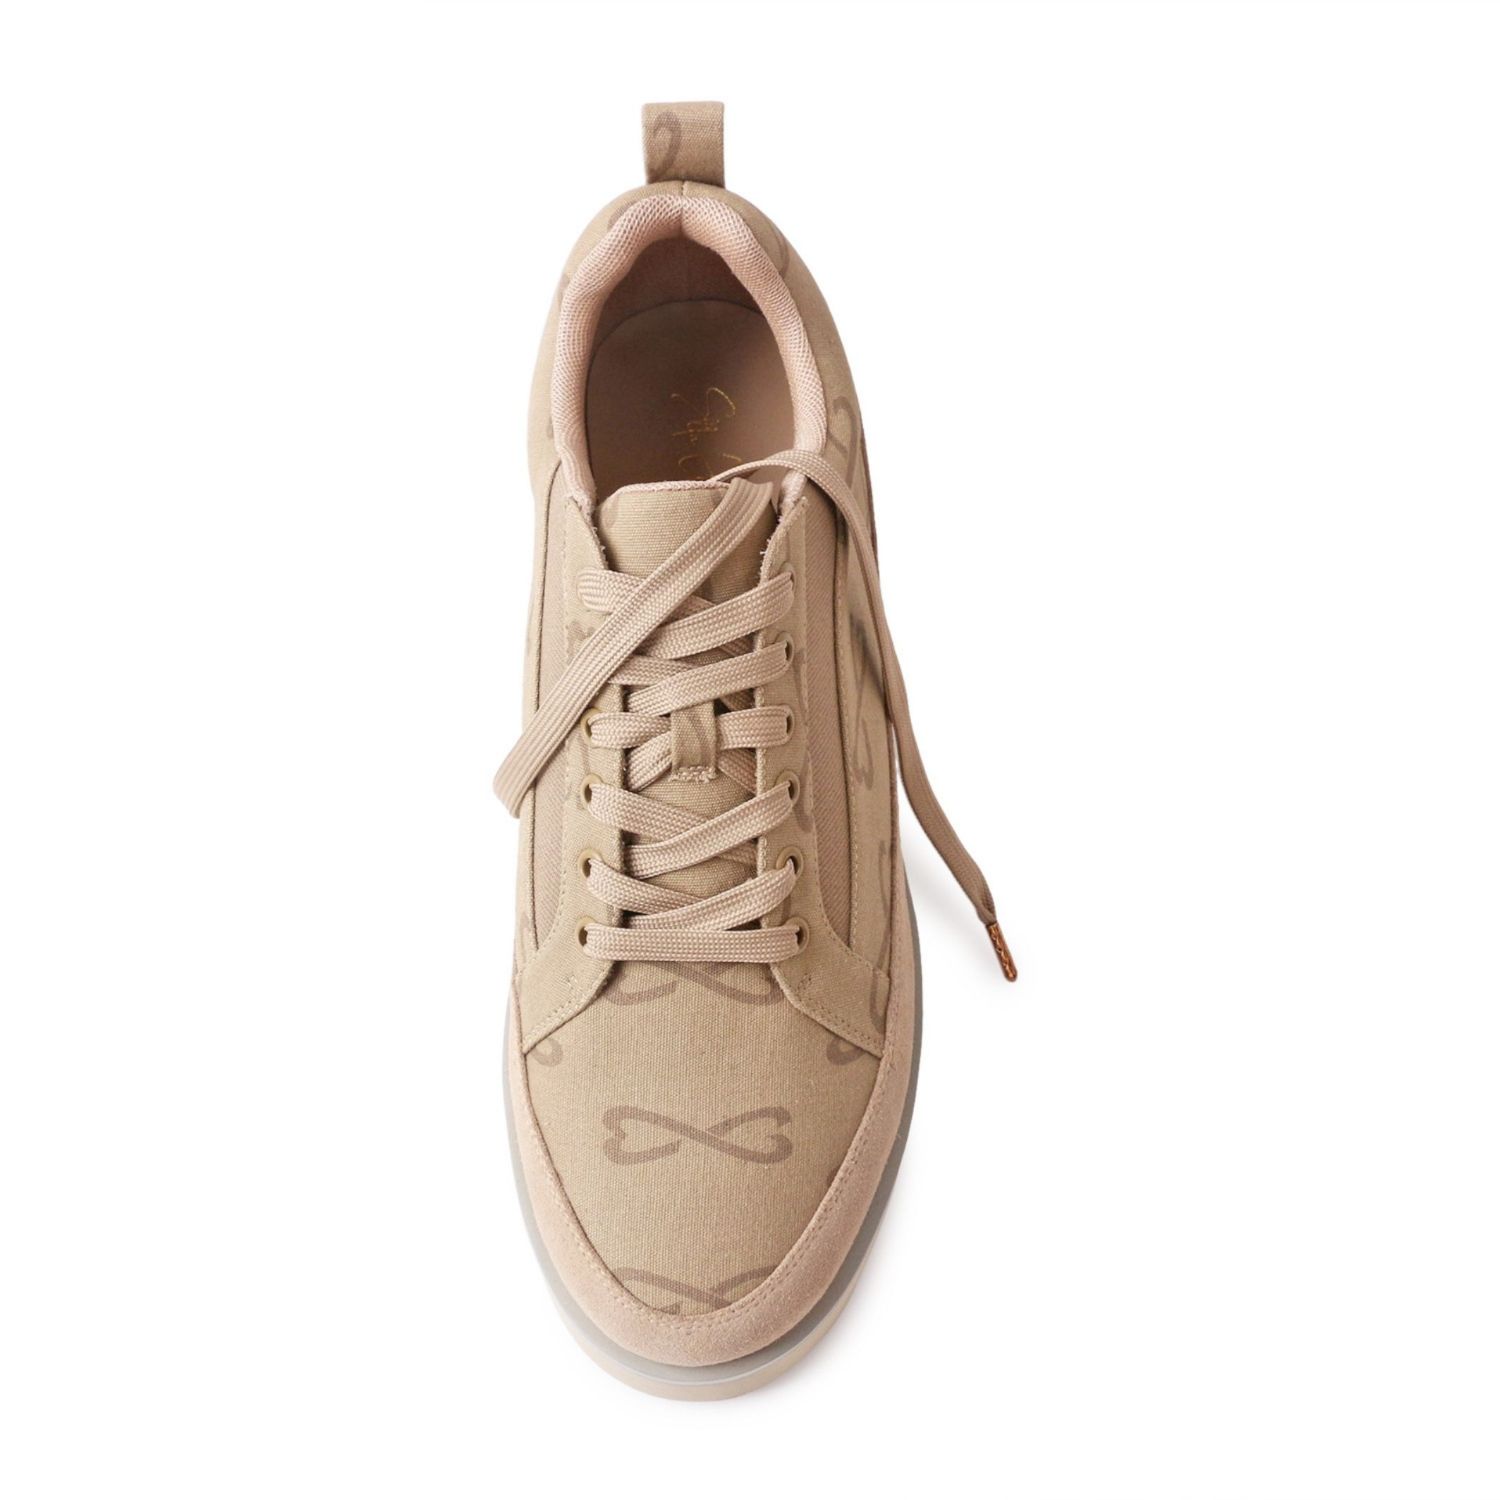 Etta Grove Footwear Women's Brown / Neutrals Canvas & Suede Lug Sole Casual Sneaker - Tan